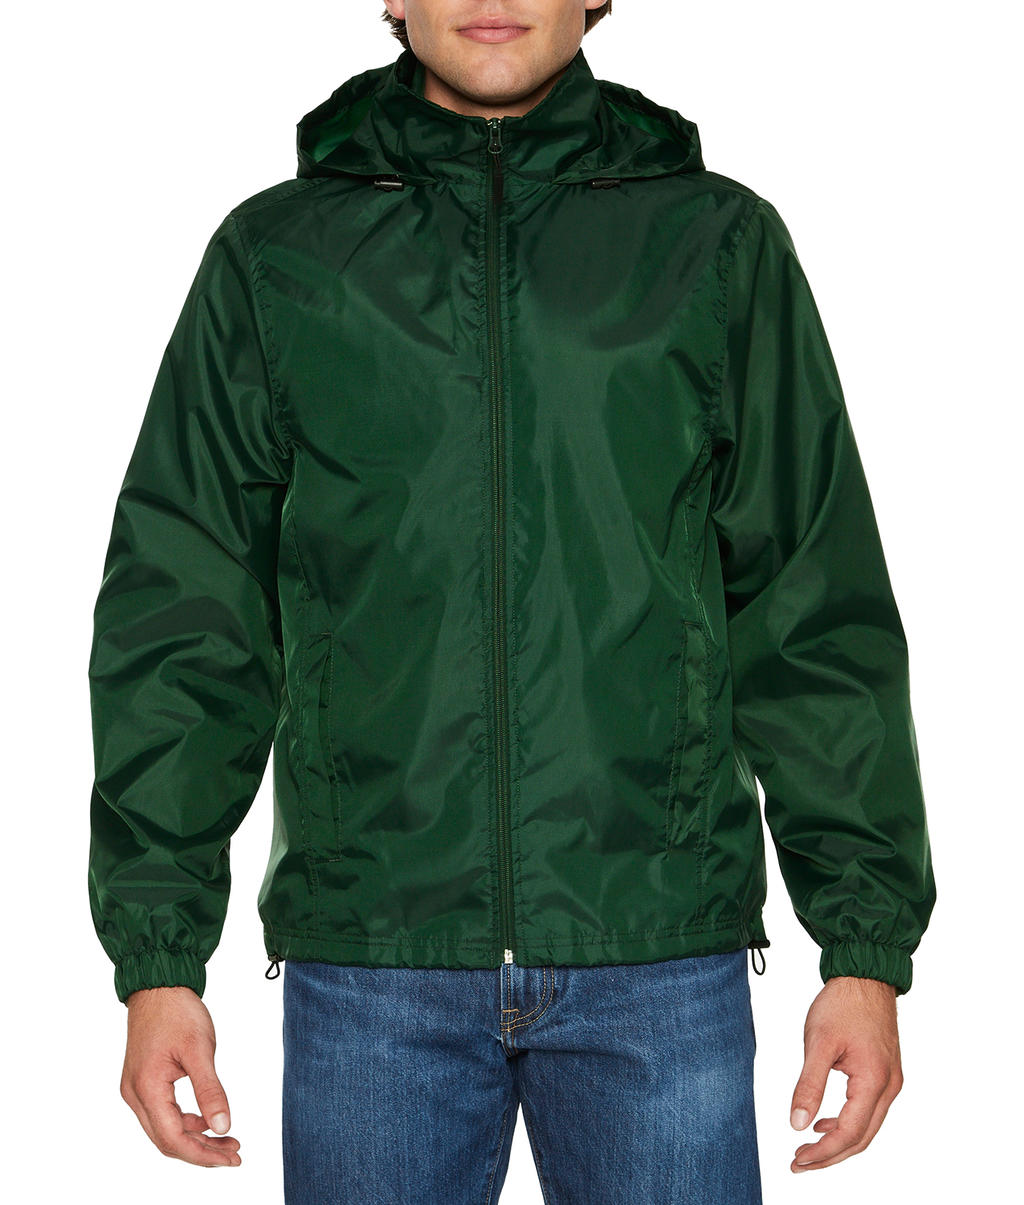  Hammer? Unisex Windwear Jacket in Farbe Forest Green